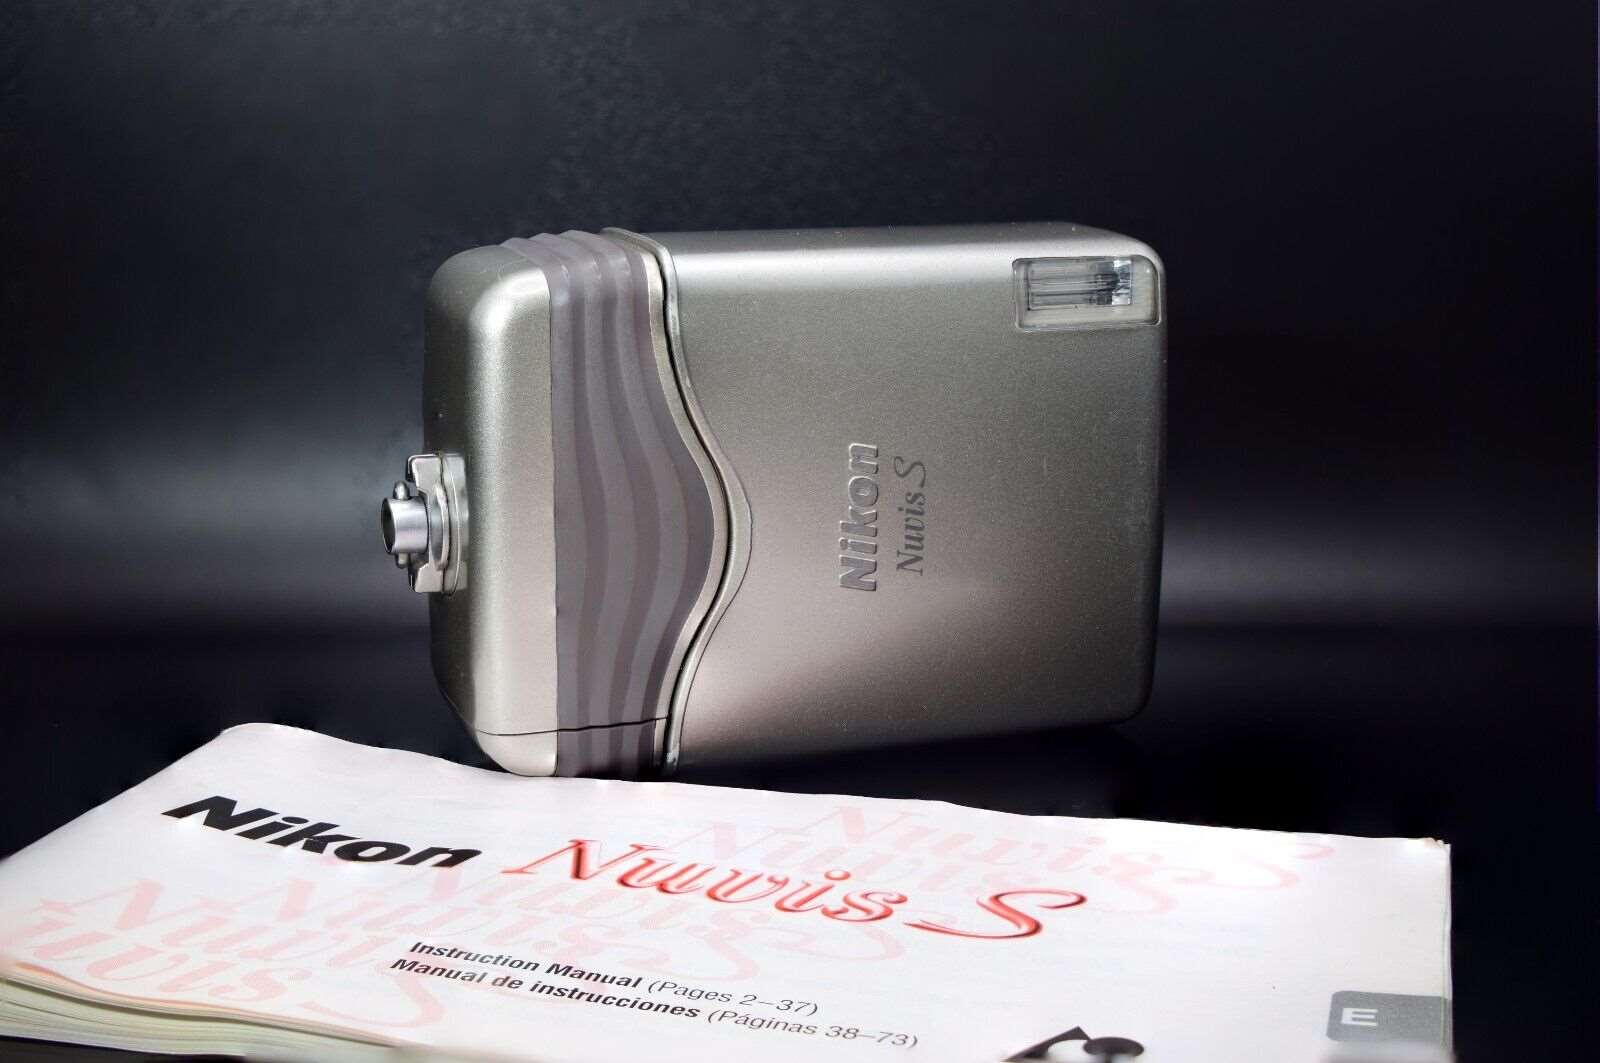 Nikon Nuvis S IX240 Collector APS Film Camera with built-in Nikon 22.5-66mm Macro Zoom Lens